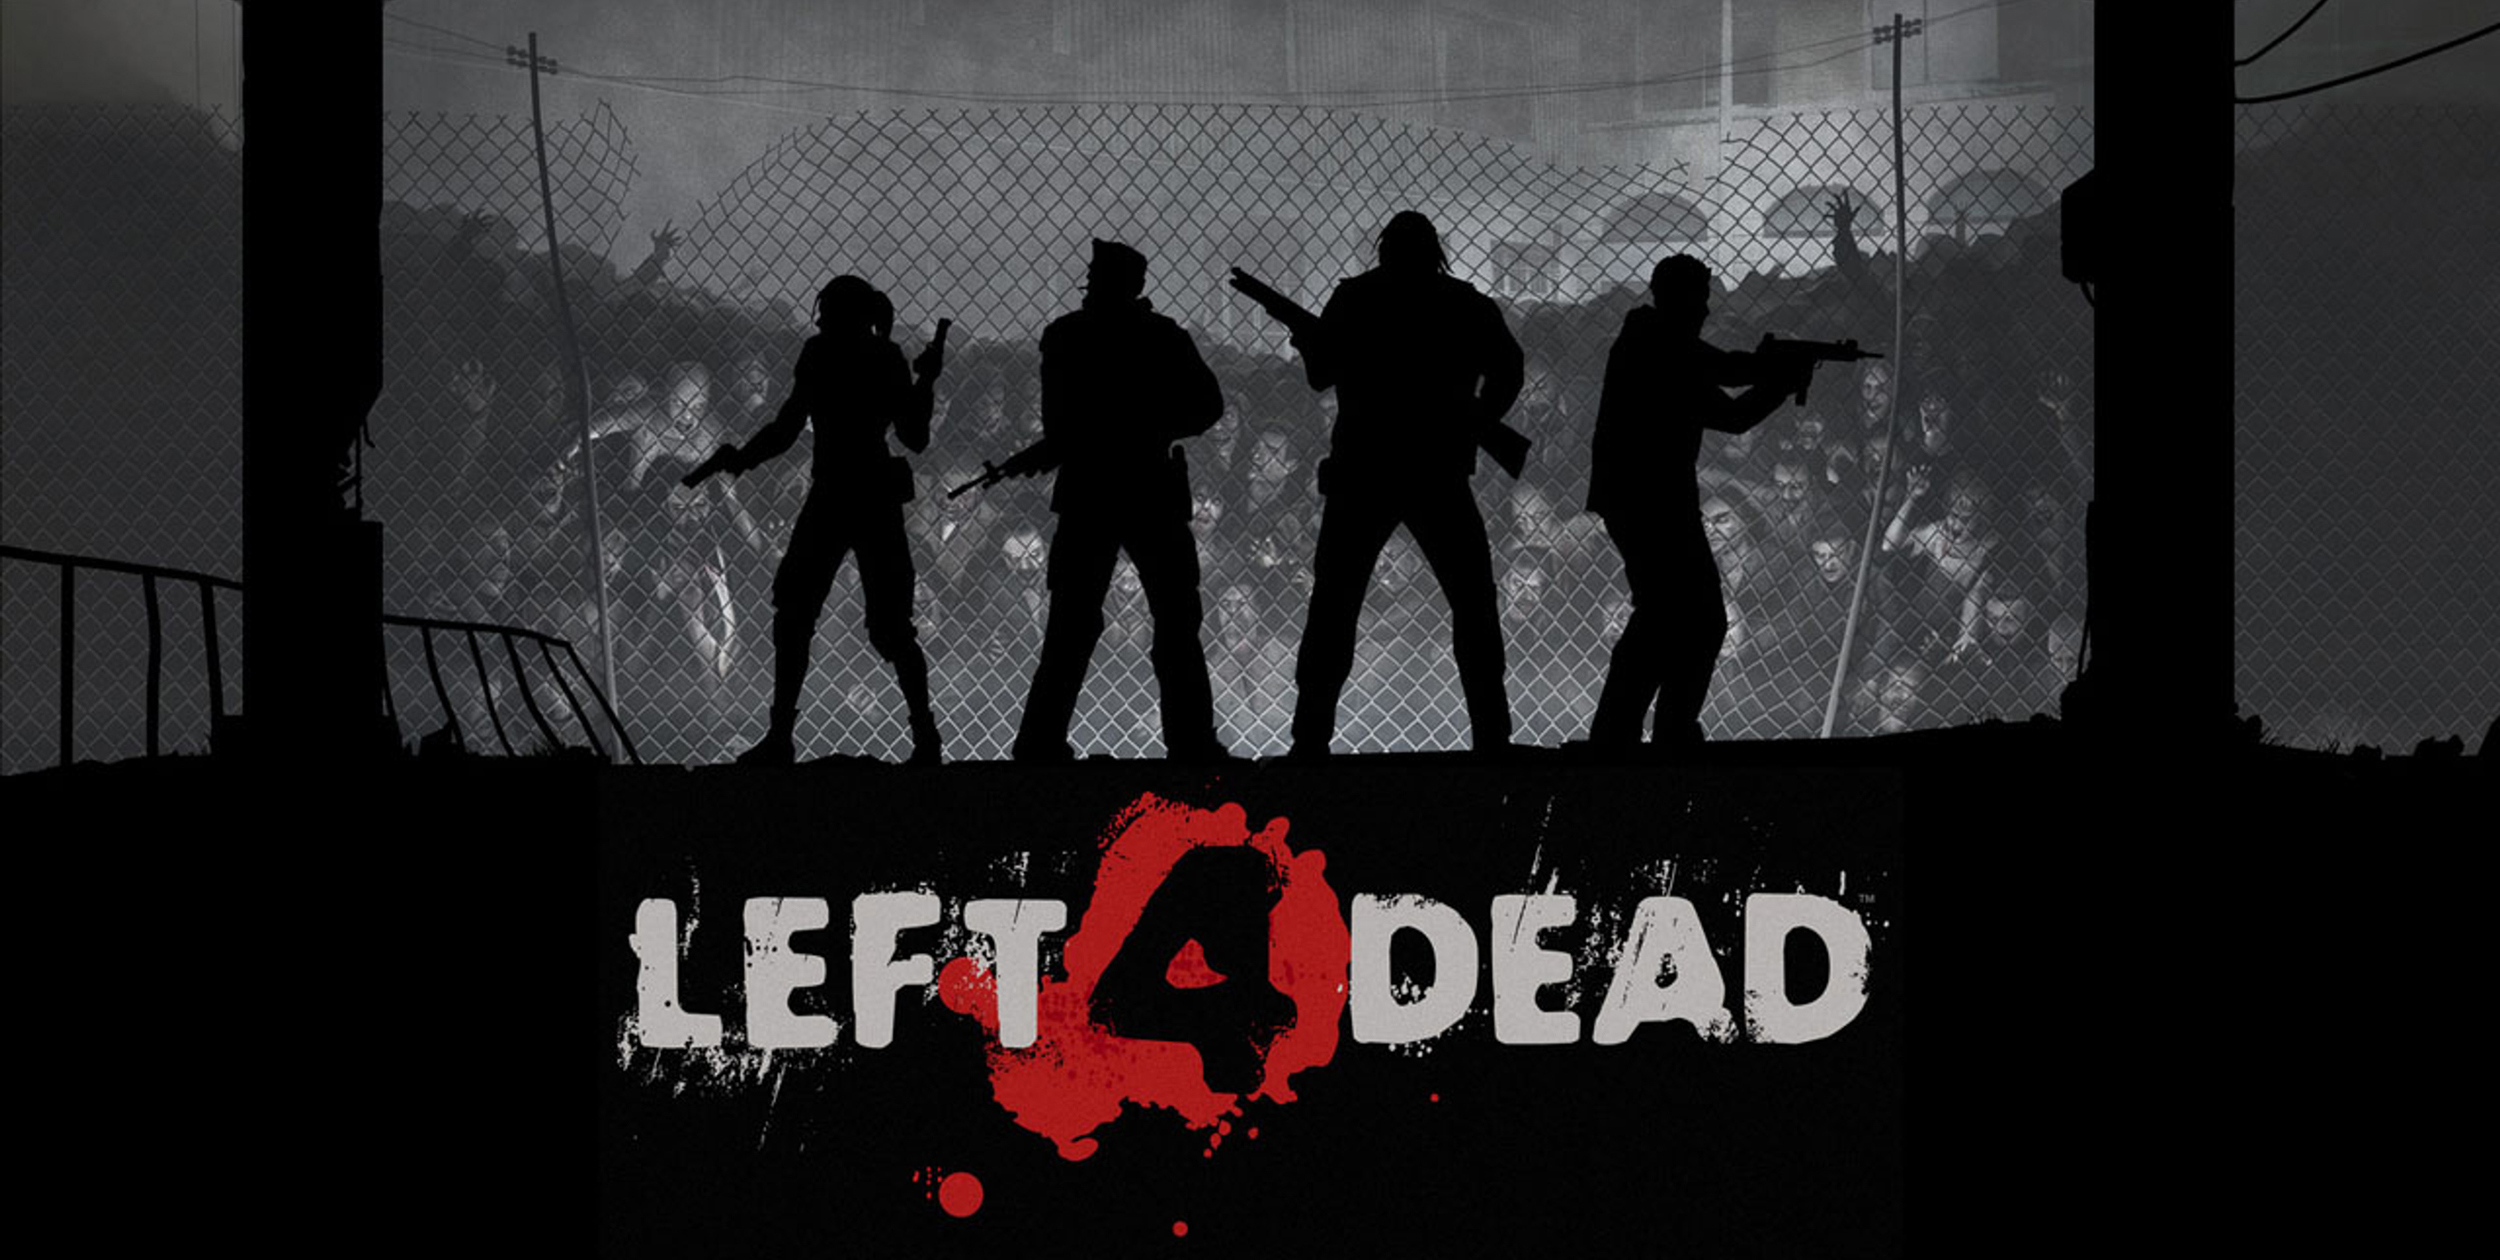 video games, Valve Corporation, Left 4 Dead - desktop wallpaper